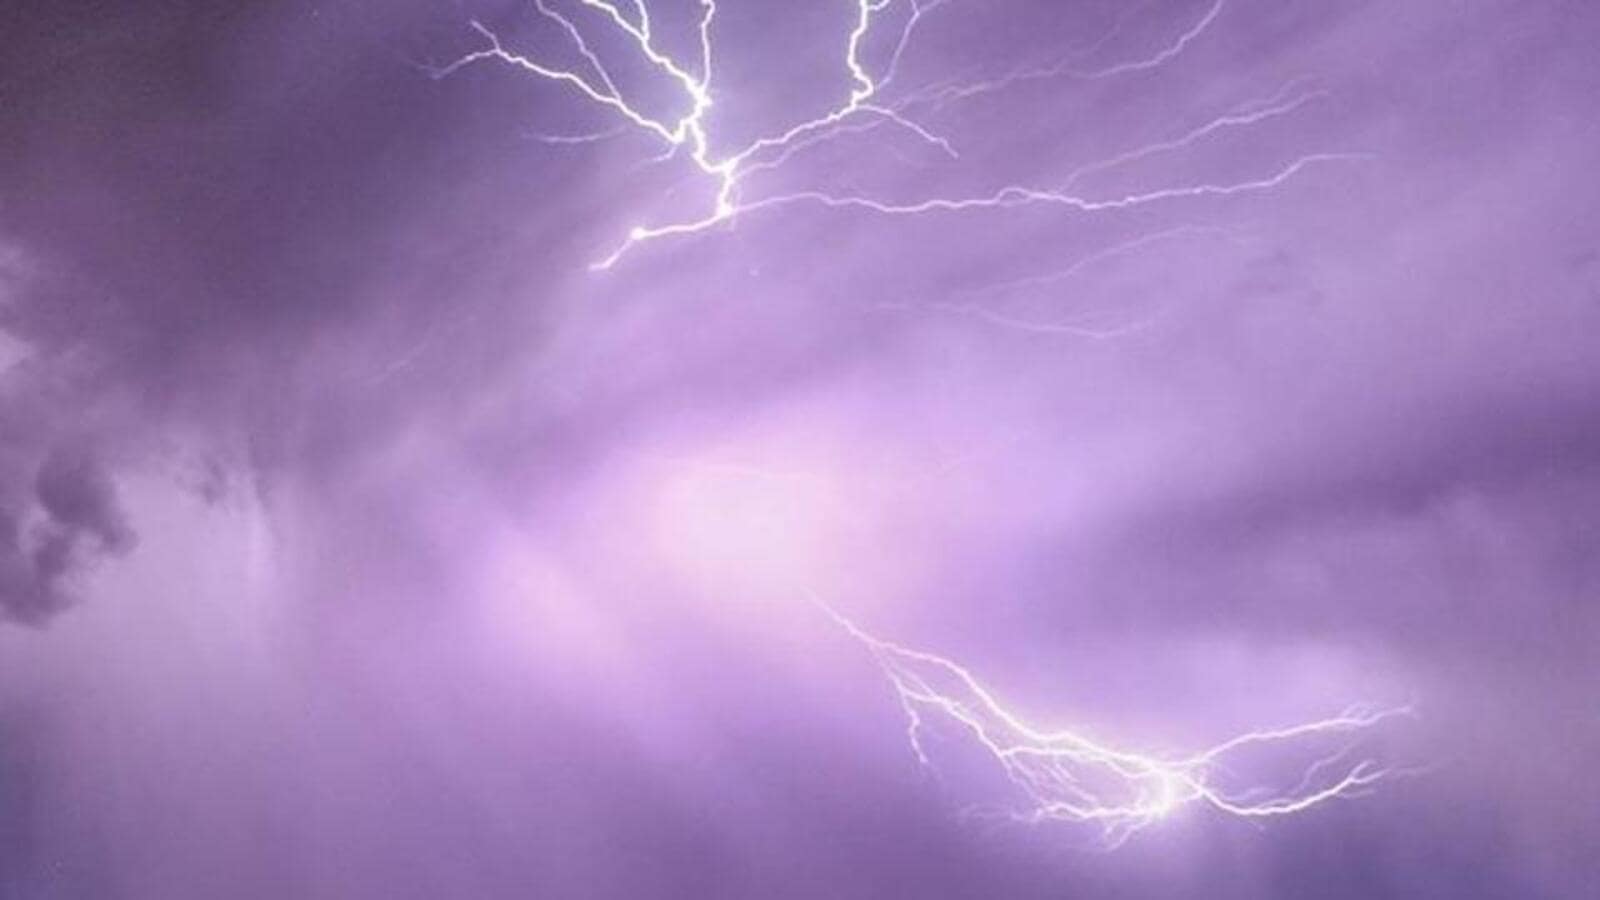 Lightning strikes kill 20 people in Bihar in 48 hrs; IMD predicts more ...